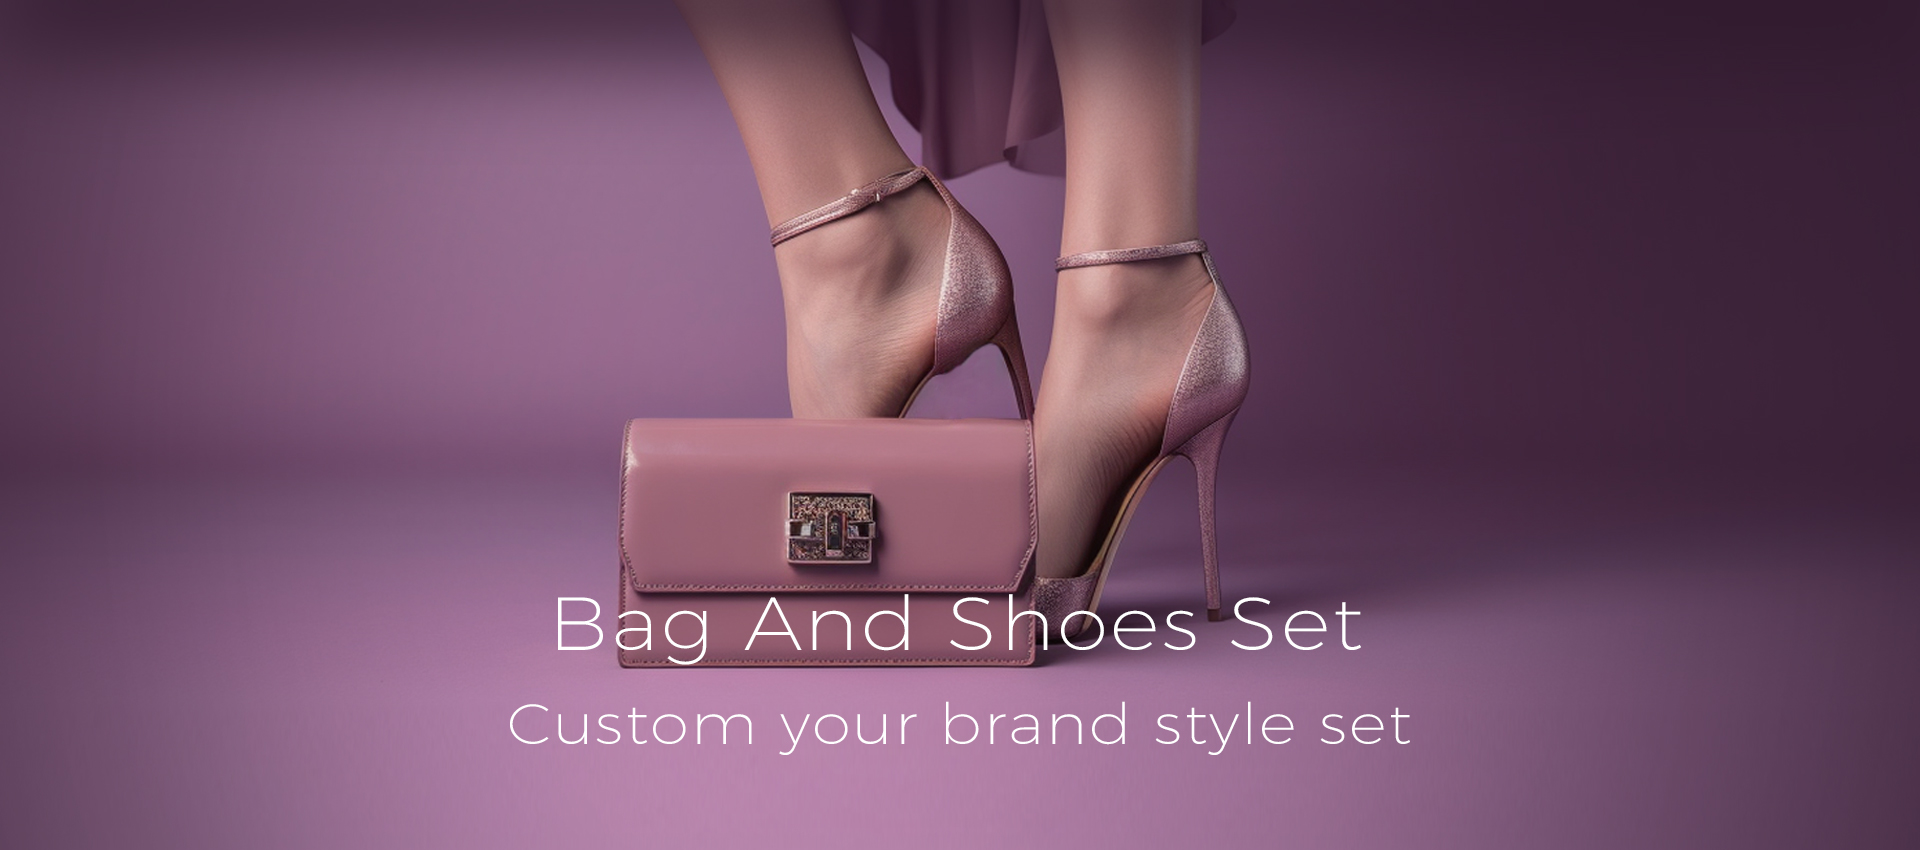 XINZIRAIN custom shoe and bag set